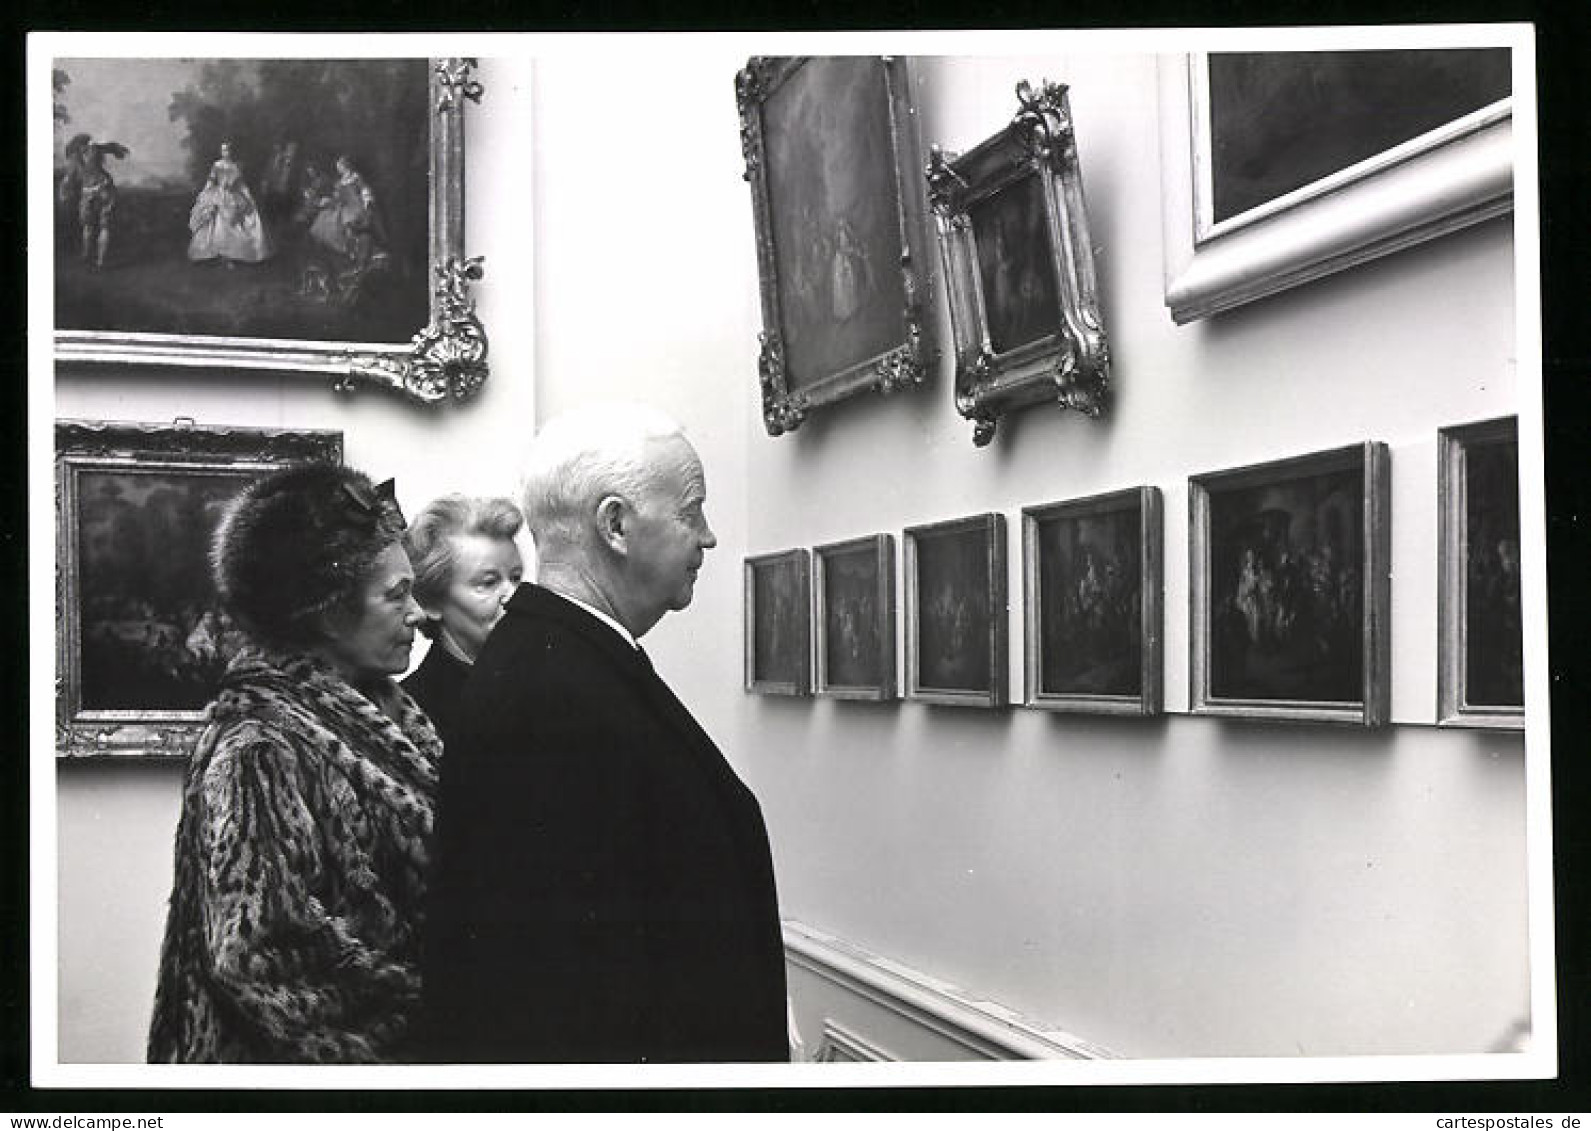 Fotografie Unbekannter Fotograf, Ansicht Berlin, Bundespräsident Heinrich Lübke Bei Einer Ausstellung 1962  - Célébrités